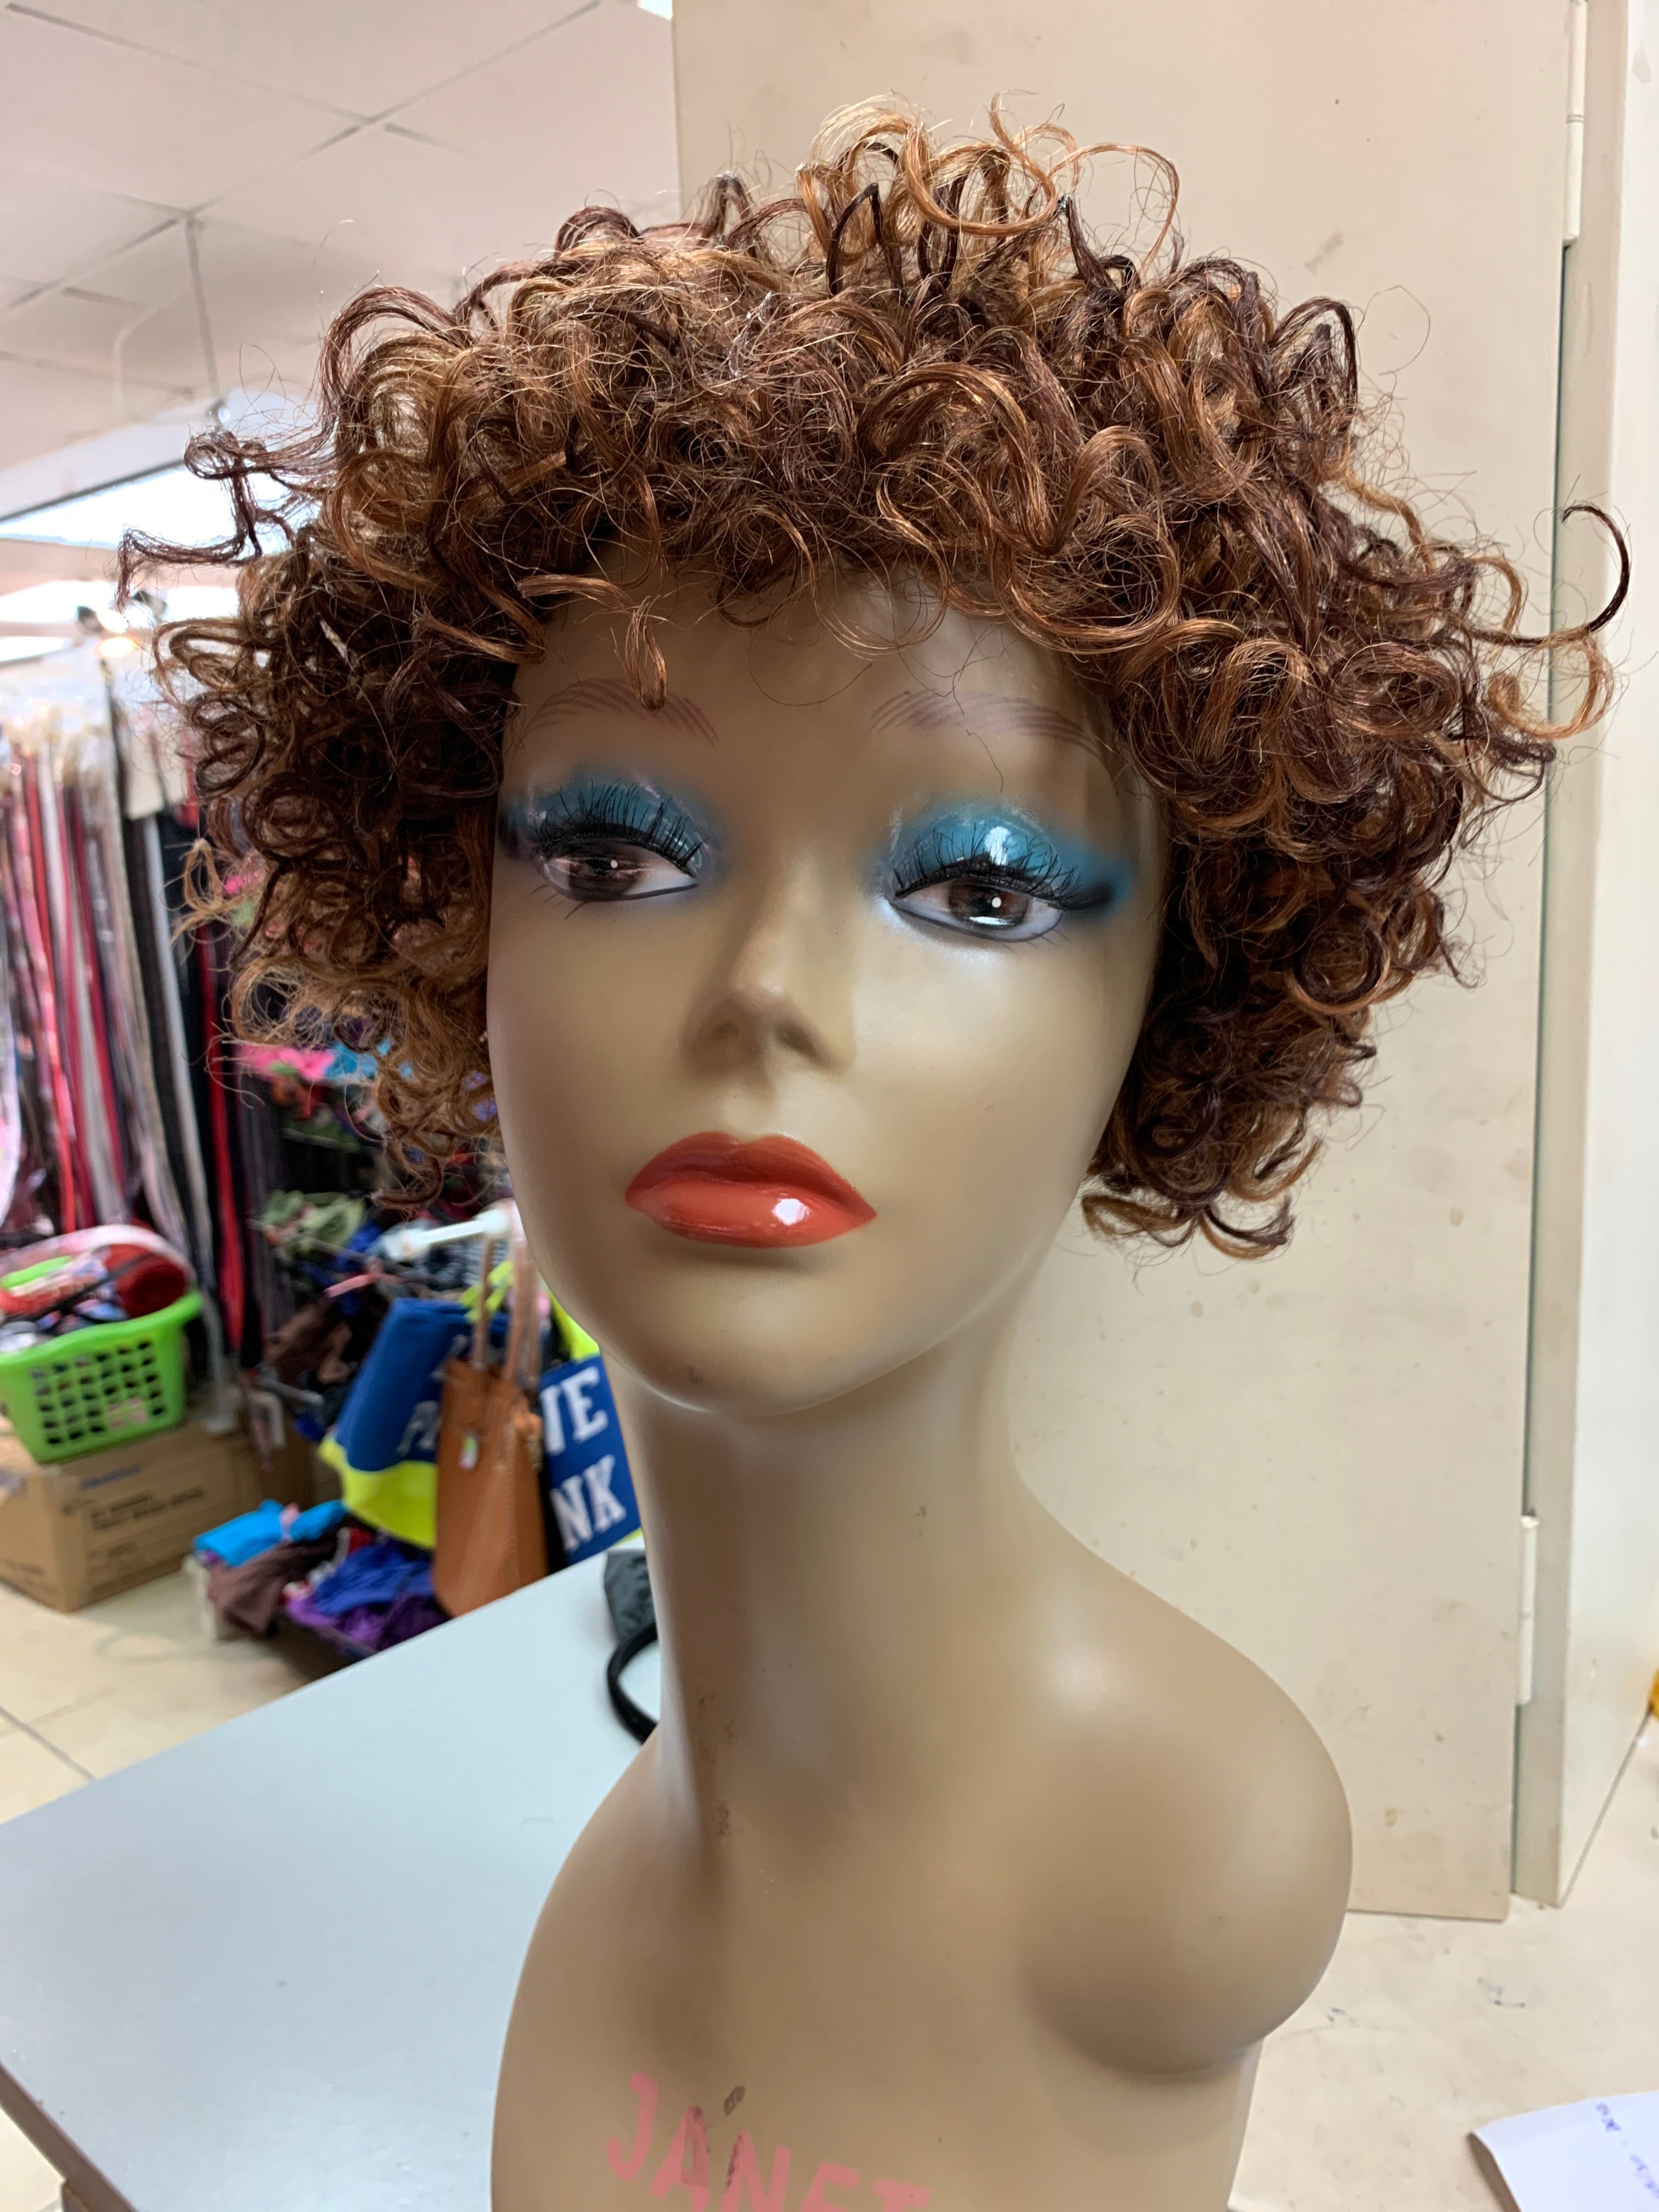 It’s a wig Ann